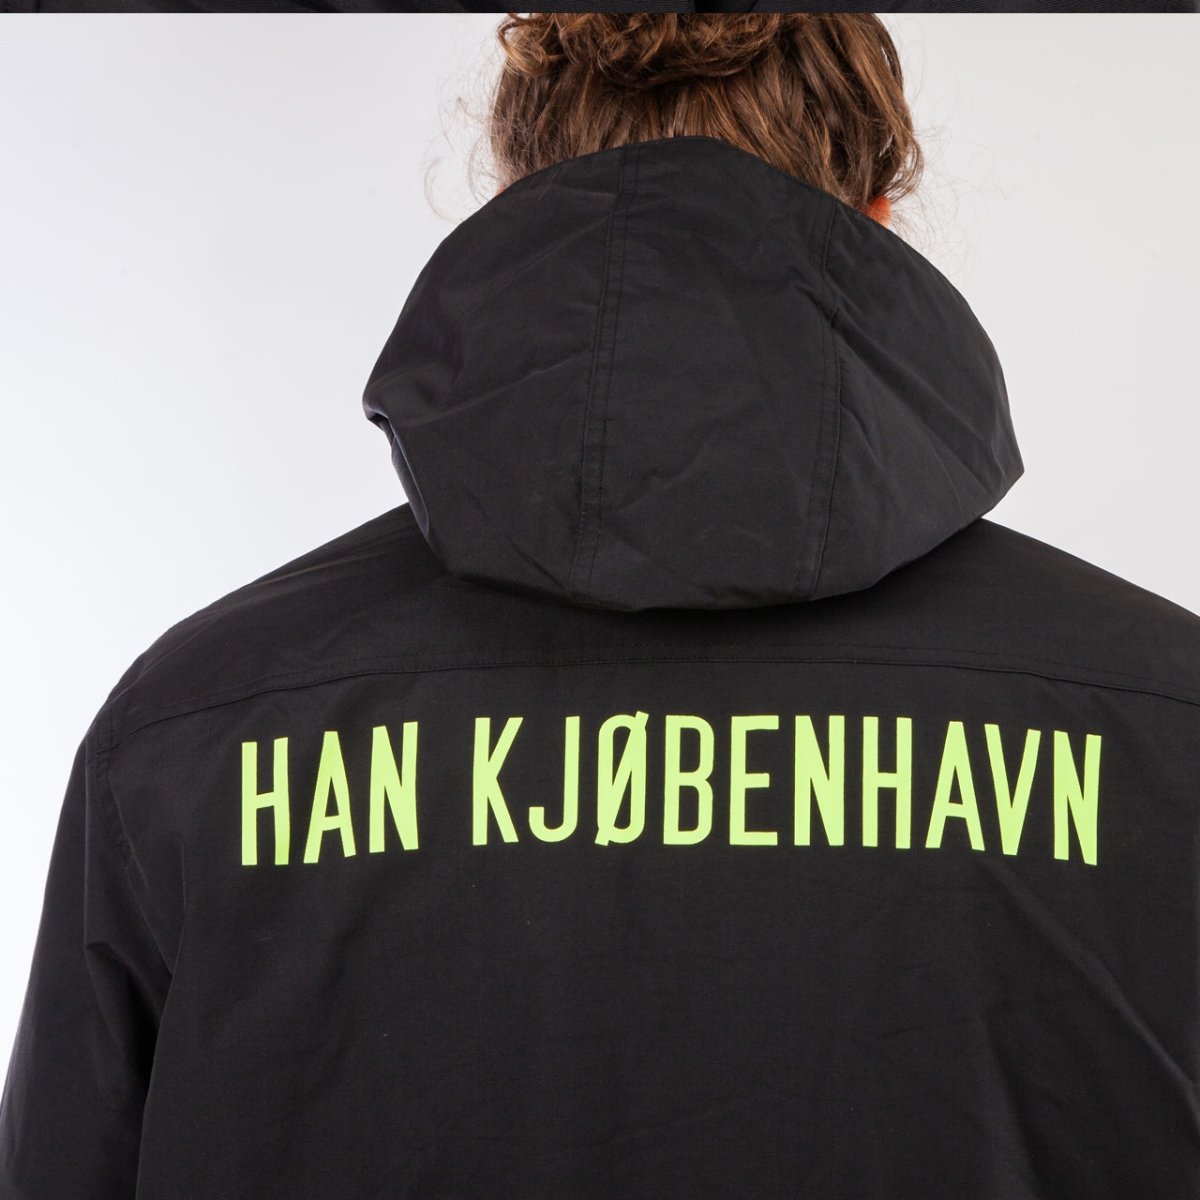 Han Kjobenhavn Sport Coat (Schwarz)  - Allike Store